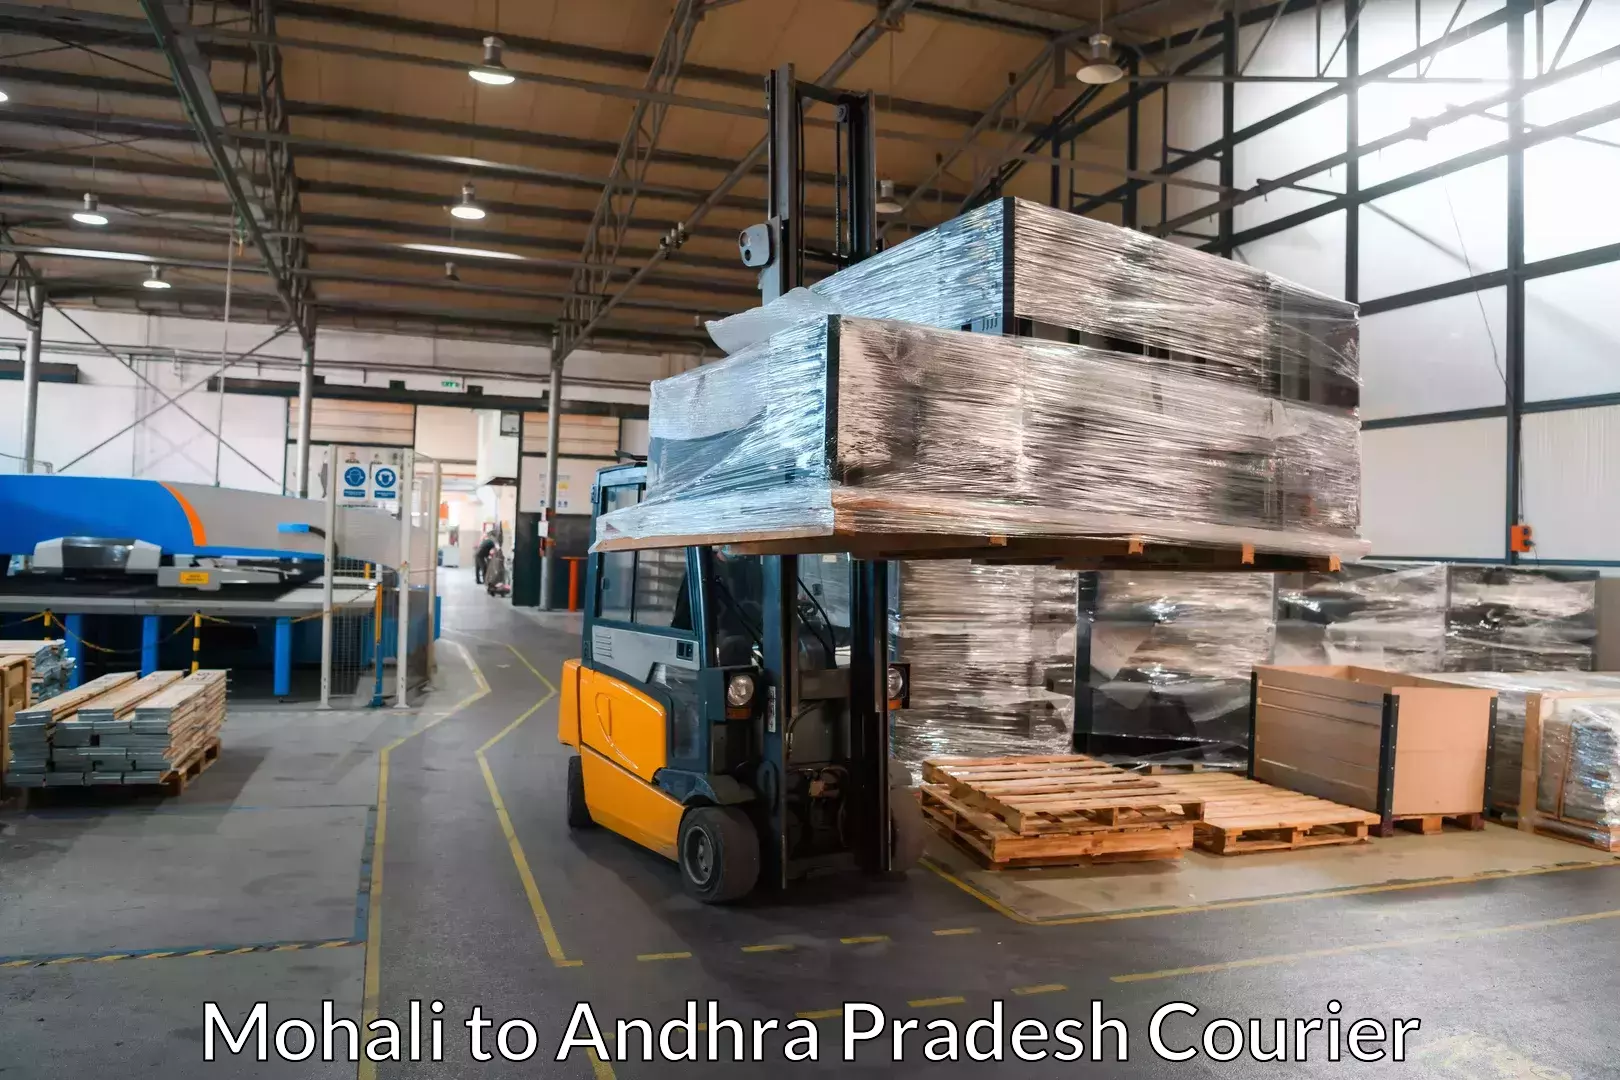 Furniture delivery service Mohali to Chodavaram